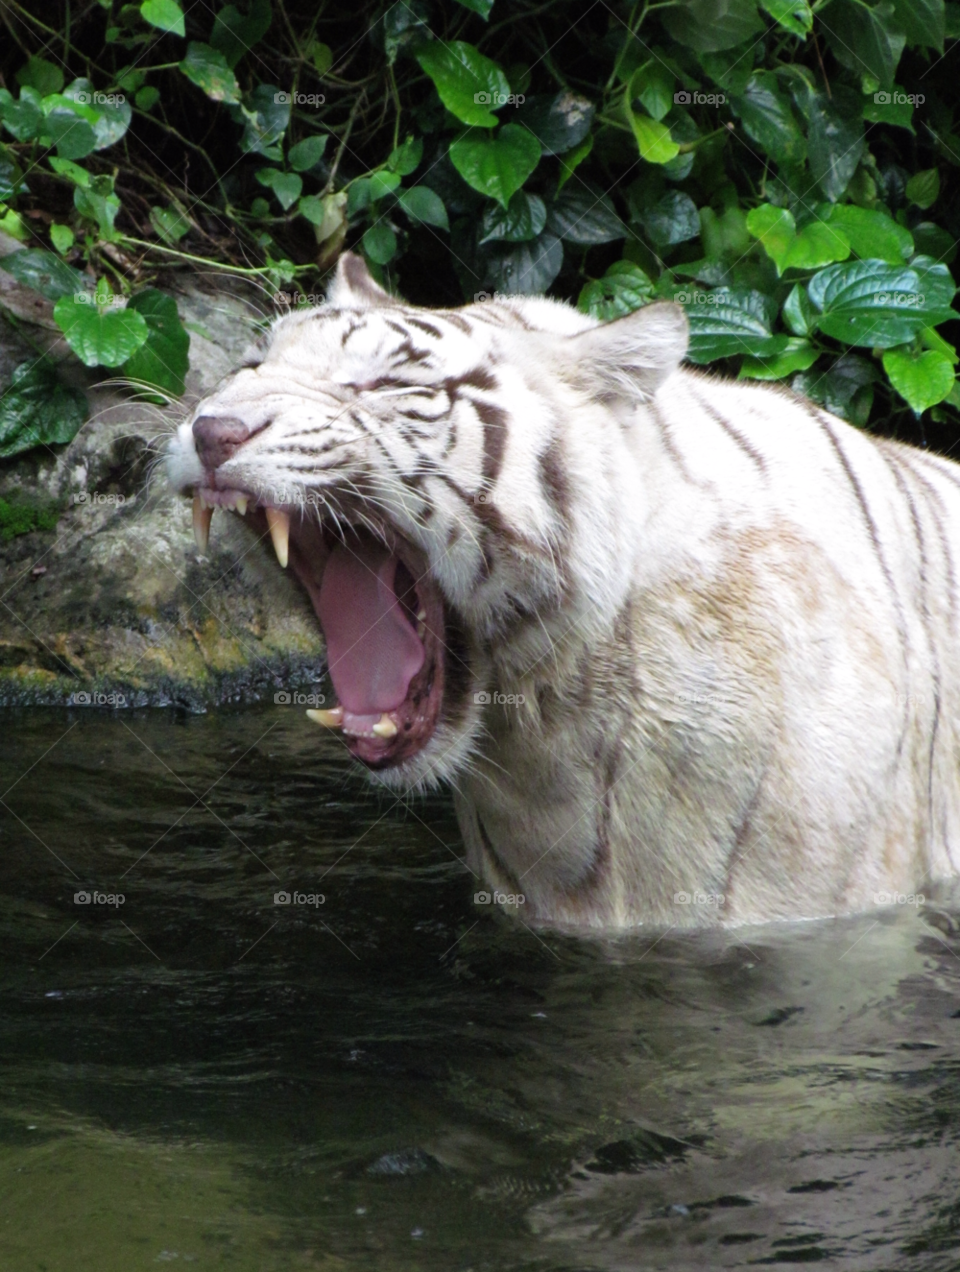 singapore zoo white teeth tiger by luke.twomey85